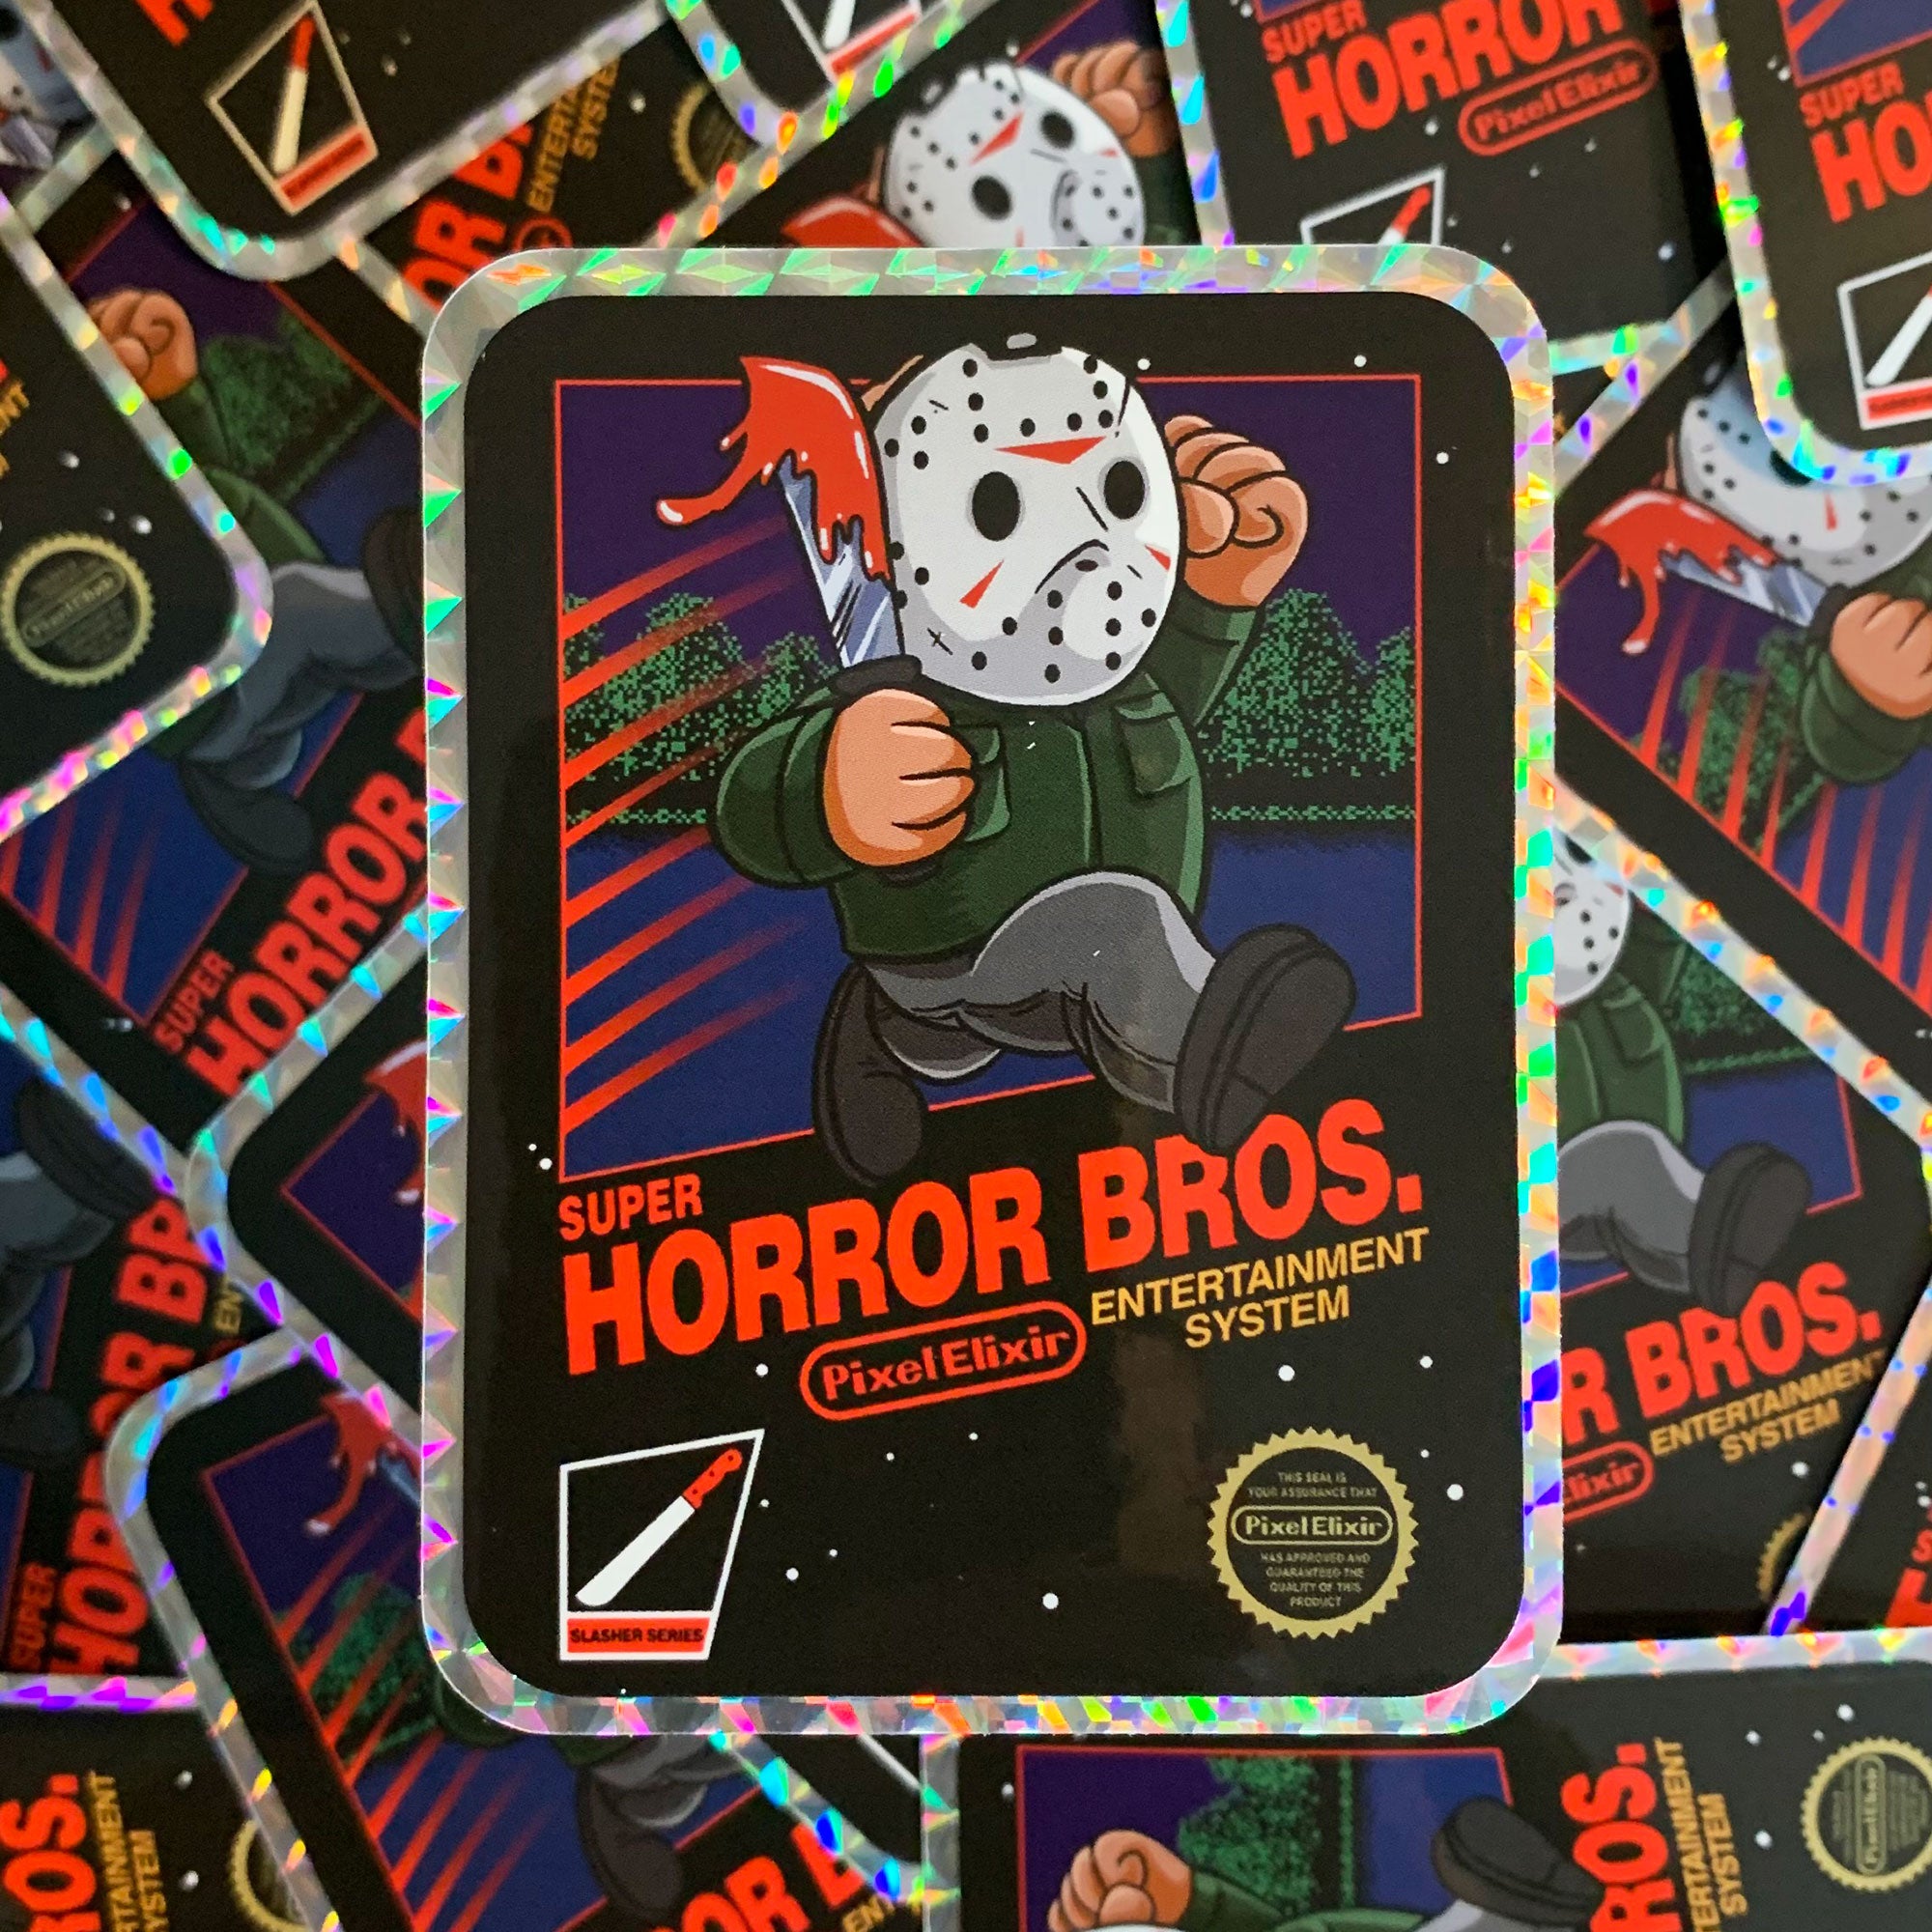 Super Horror Bros. "Black Box" Hologram Sticker